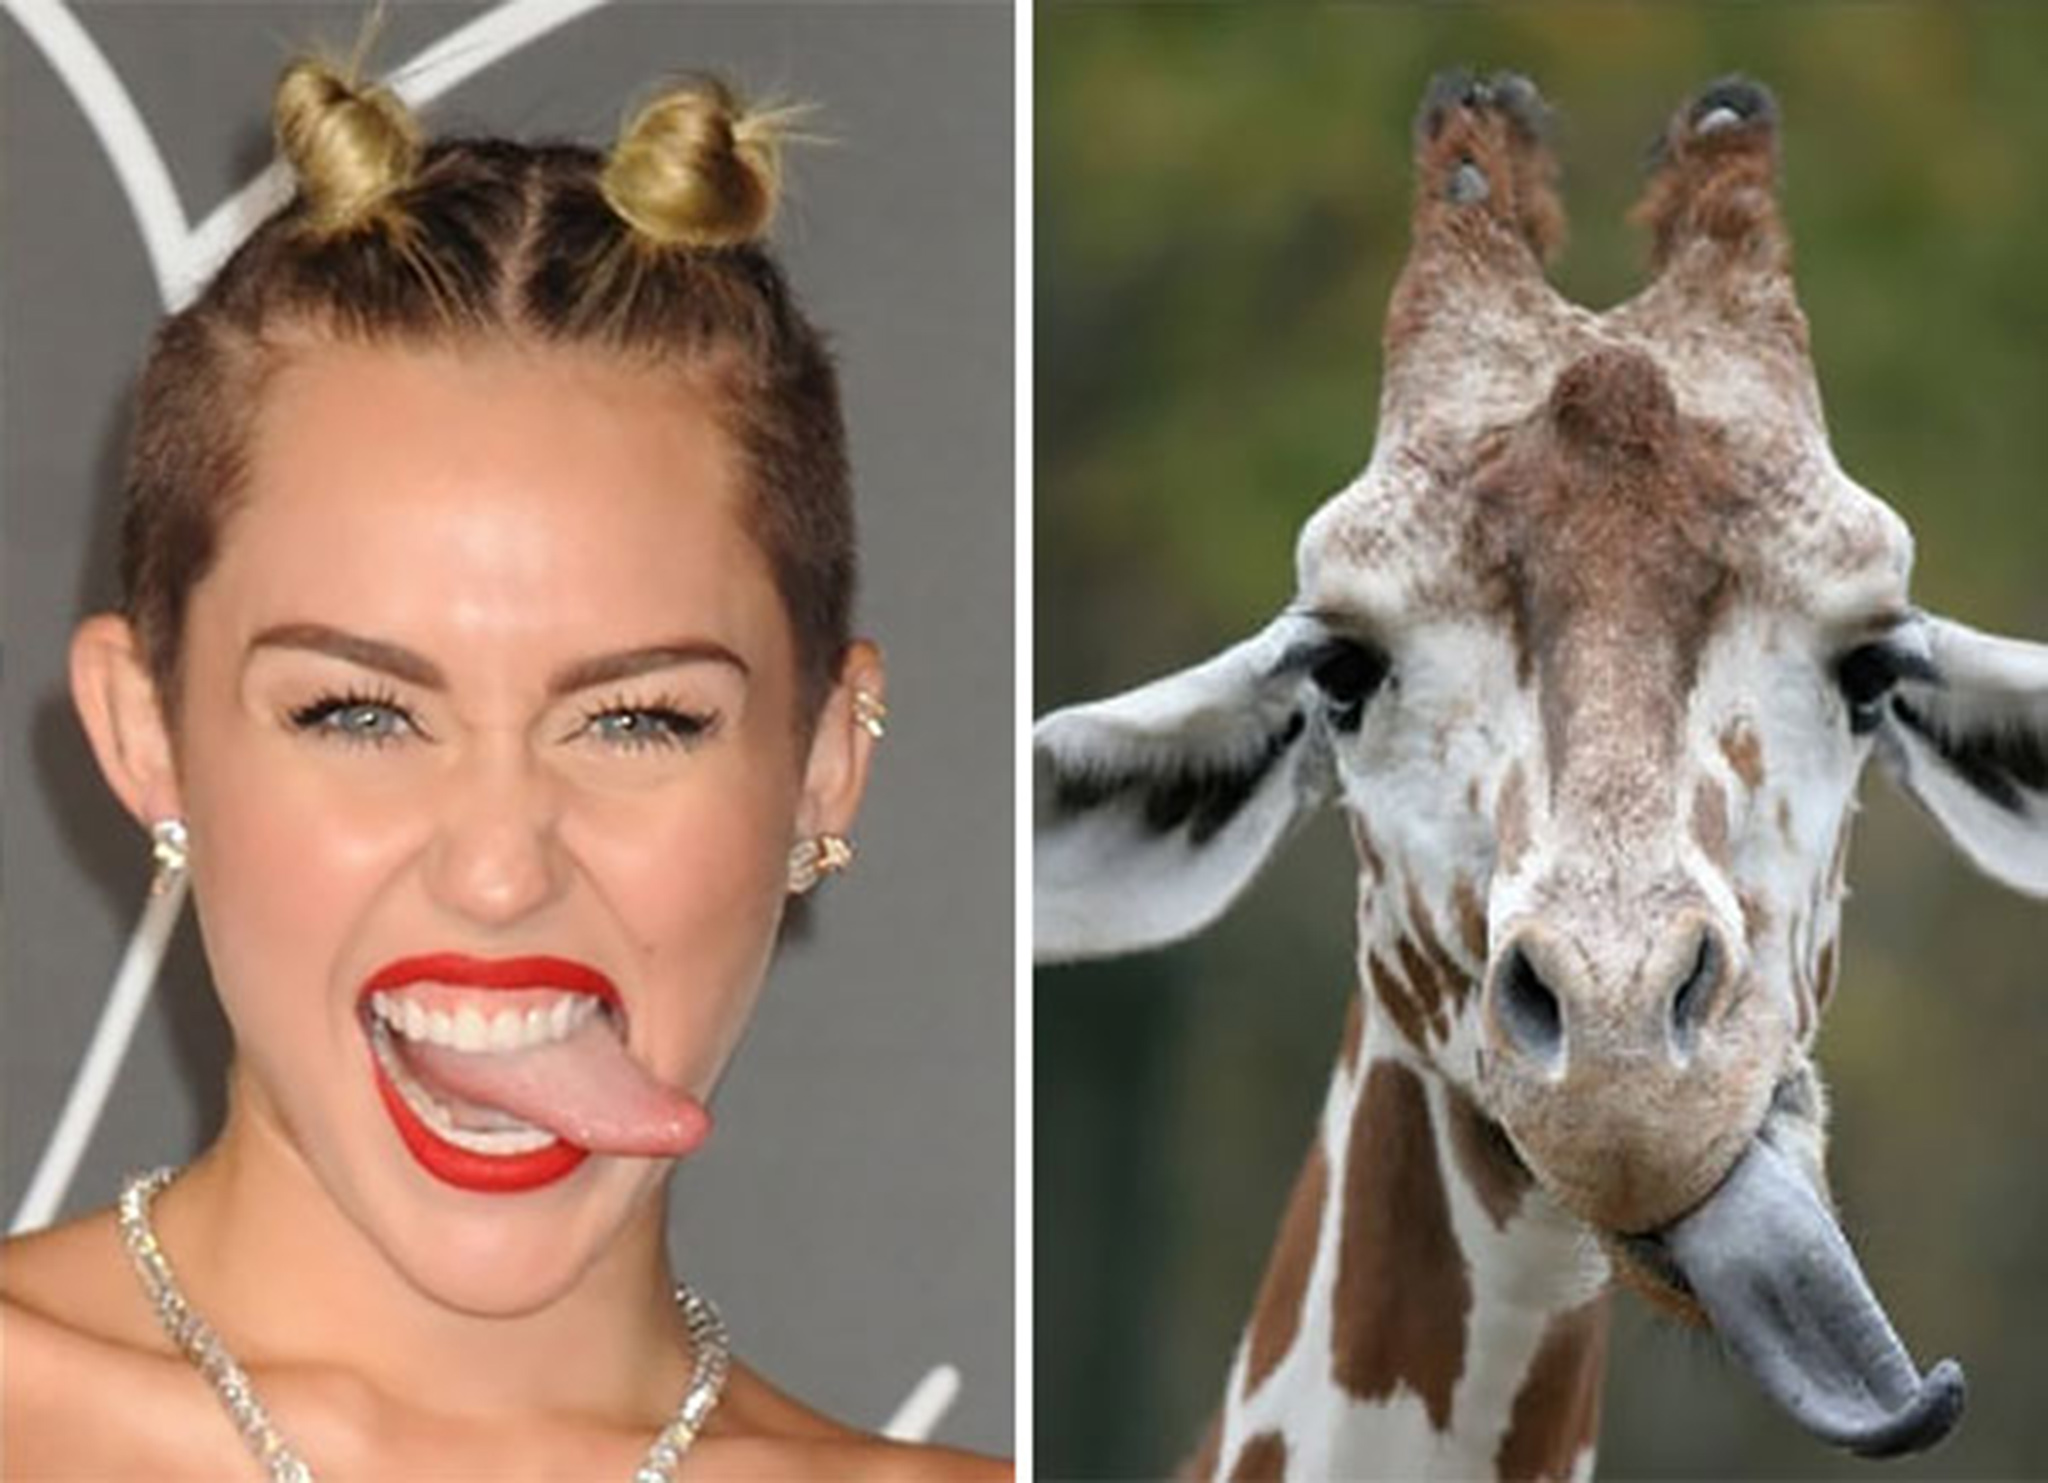 13 Giraffe And Miley Cyrus